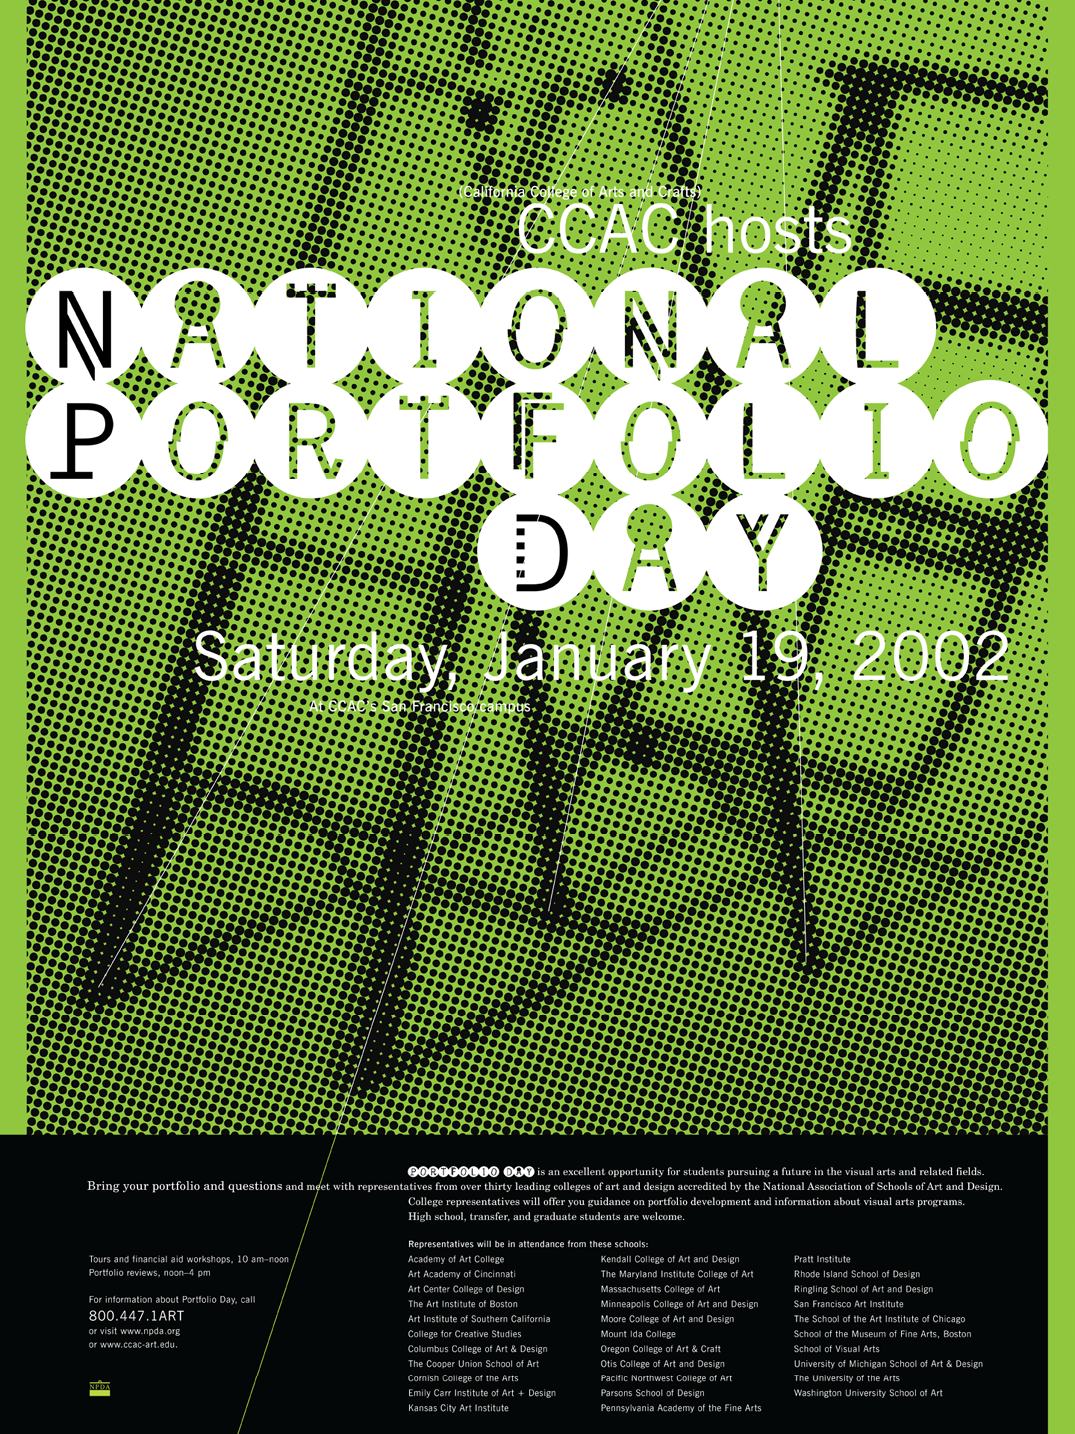 CCAC_Portfolio_day_2002_thumbnail.png